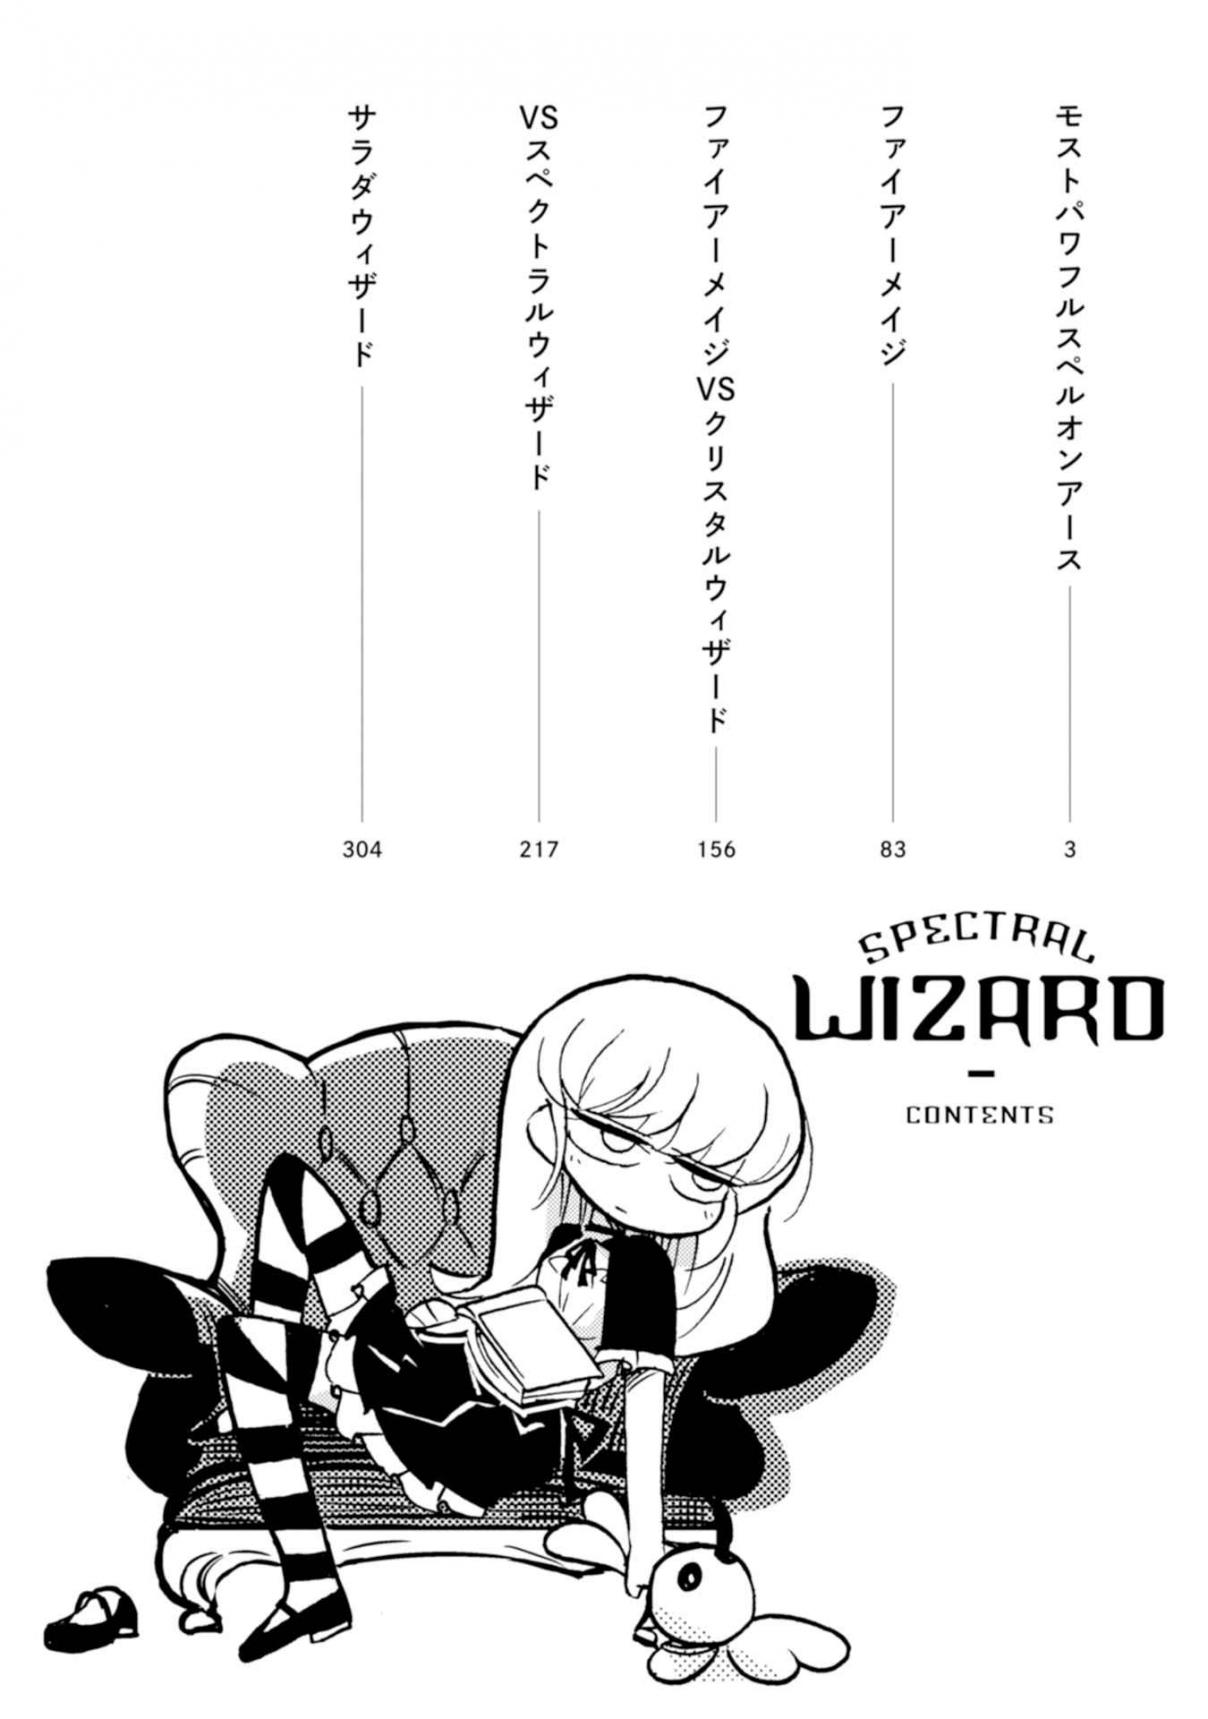 Spectral Wizard: Saikyou no Mahou wo Meguru Bouken Vol. 1 Ch. 1 Most Powerful Spell on Earth